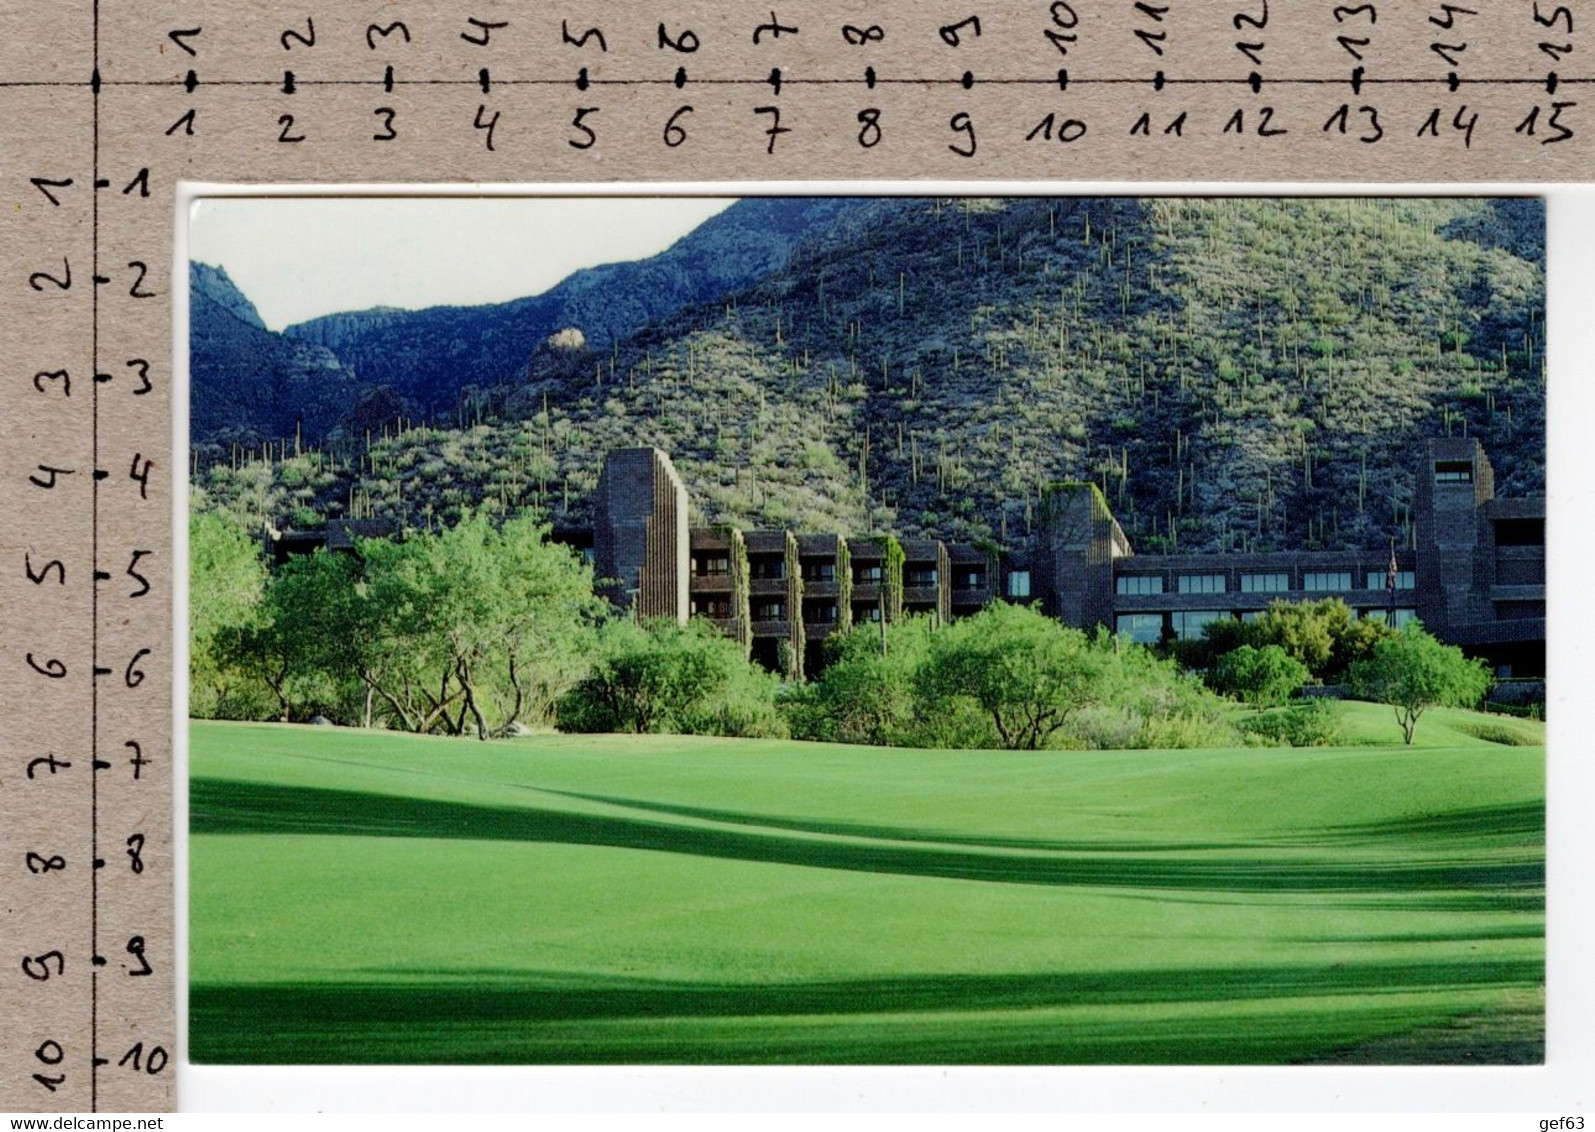 Loews Ventana Canyon Resort, Tucson Arizona - Tucson